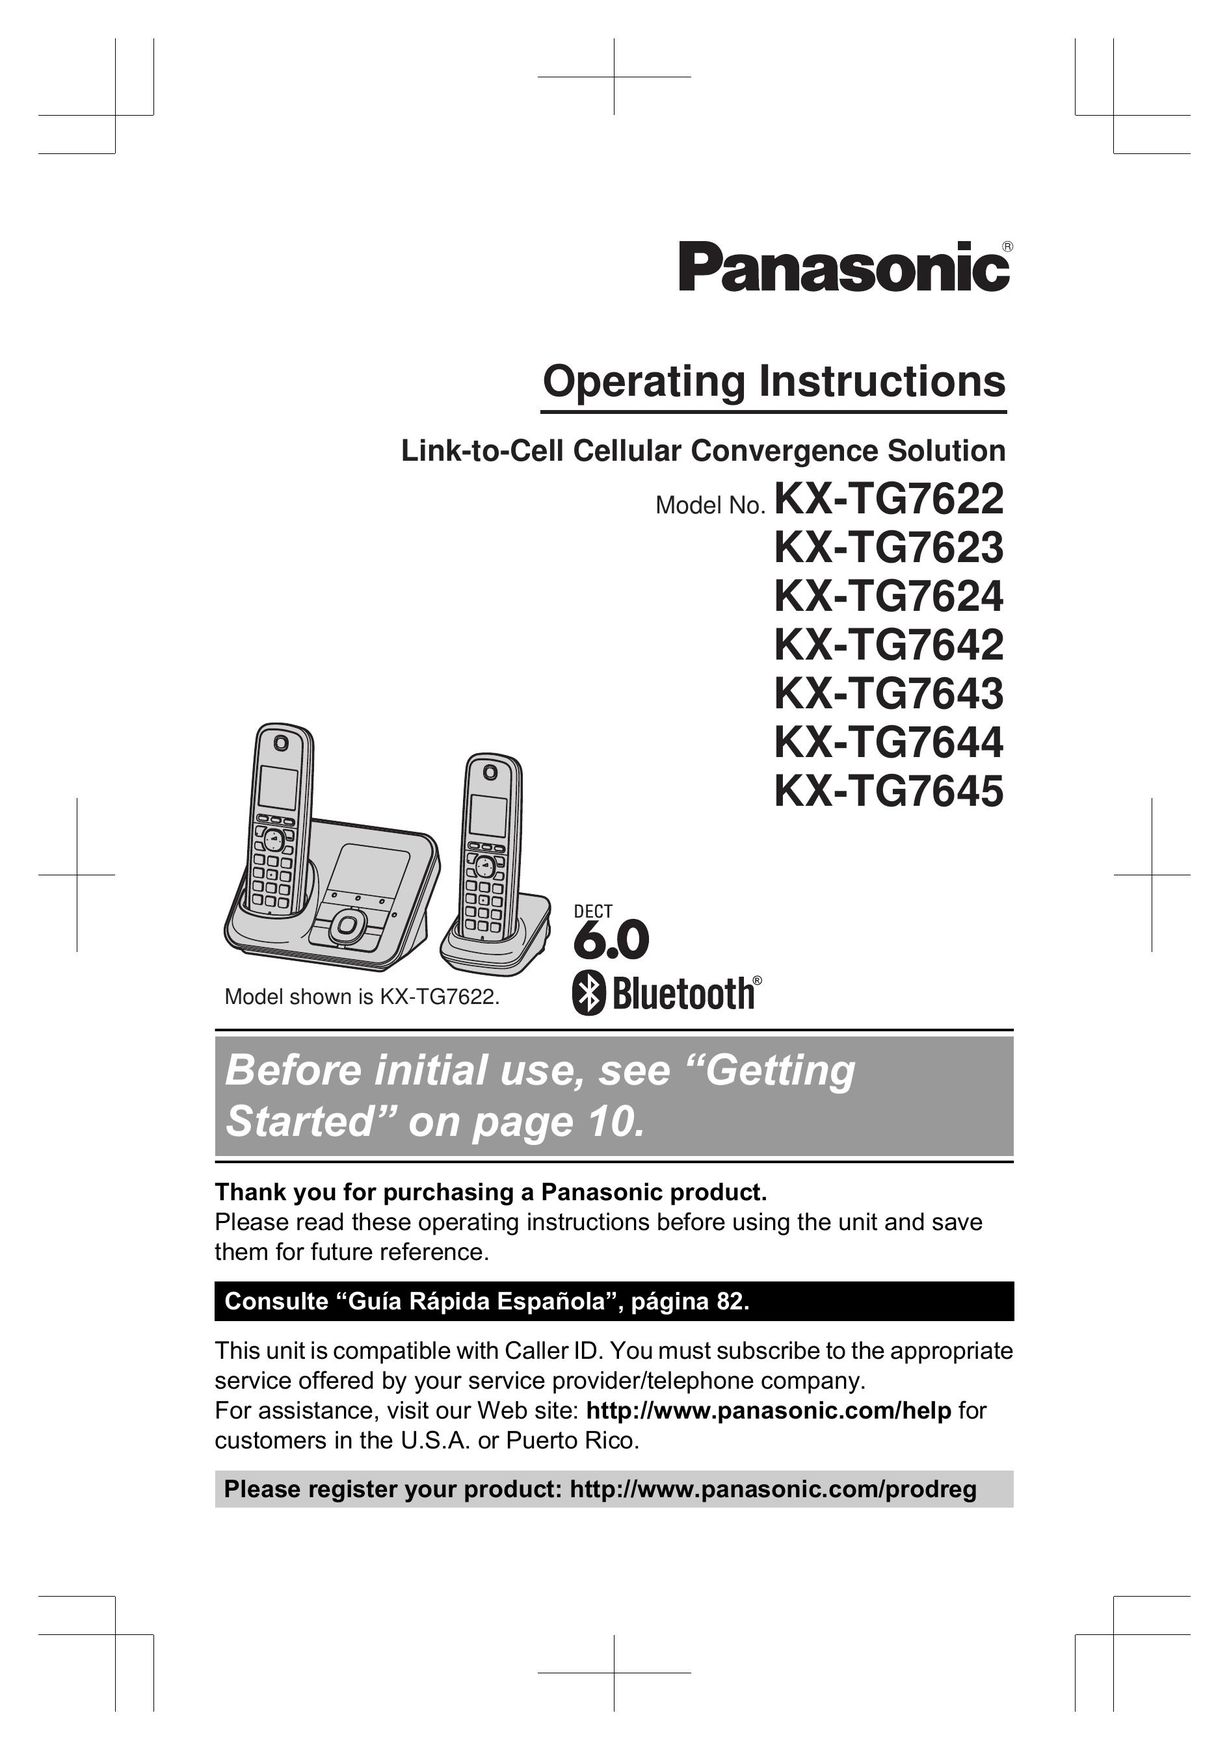 Panasonic KX-TG7644 Bluetooth Headset User Manual